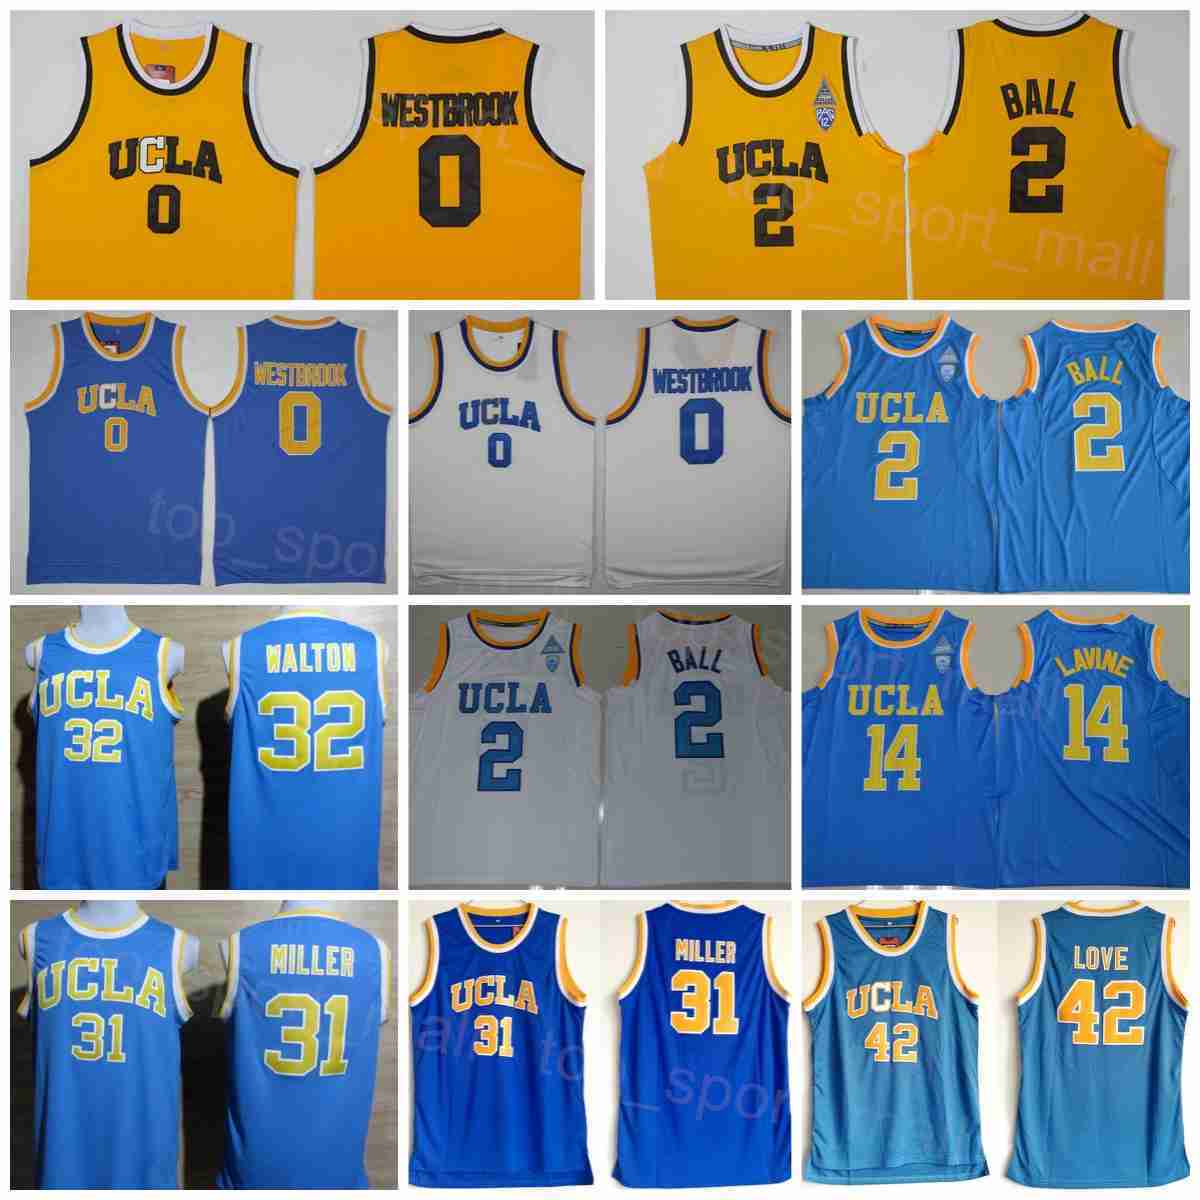 

UCLA Bruins College Basketball Kevin Love Jersey 42 Reggie Miller 31 Bill Walton 32 Zach LaVine 14 Russell Westbrook 0 Lonzo Ball 2 All Stitched University NCAA, White